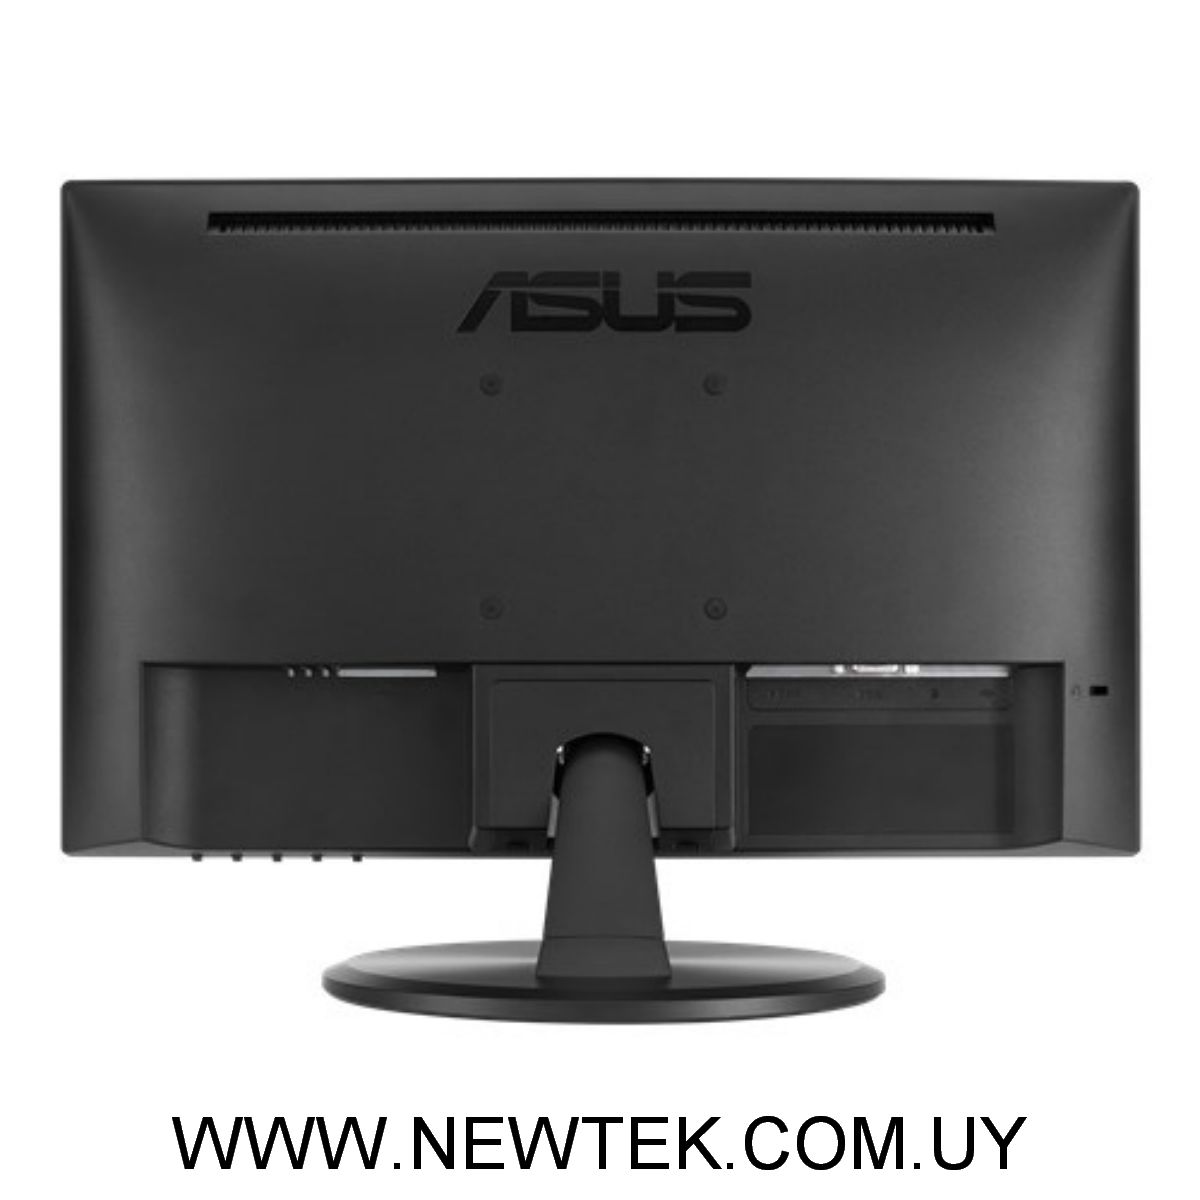 Monitor ASUS VT168H LED Multi Táctil 15.6 PULGADAS 1366x768 HD HDMI antiparpadeo